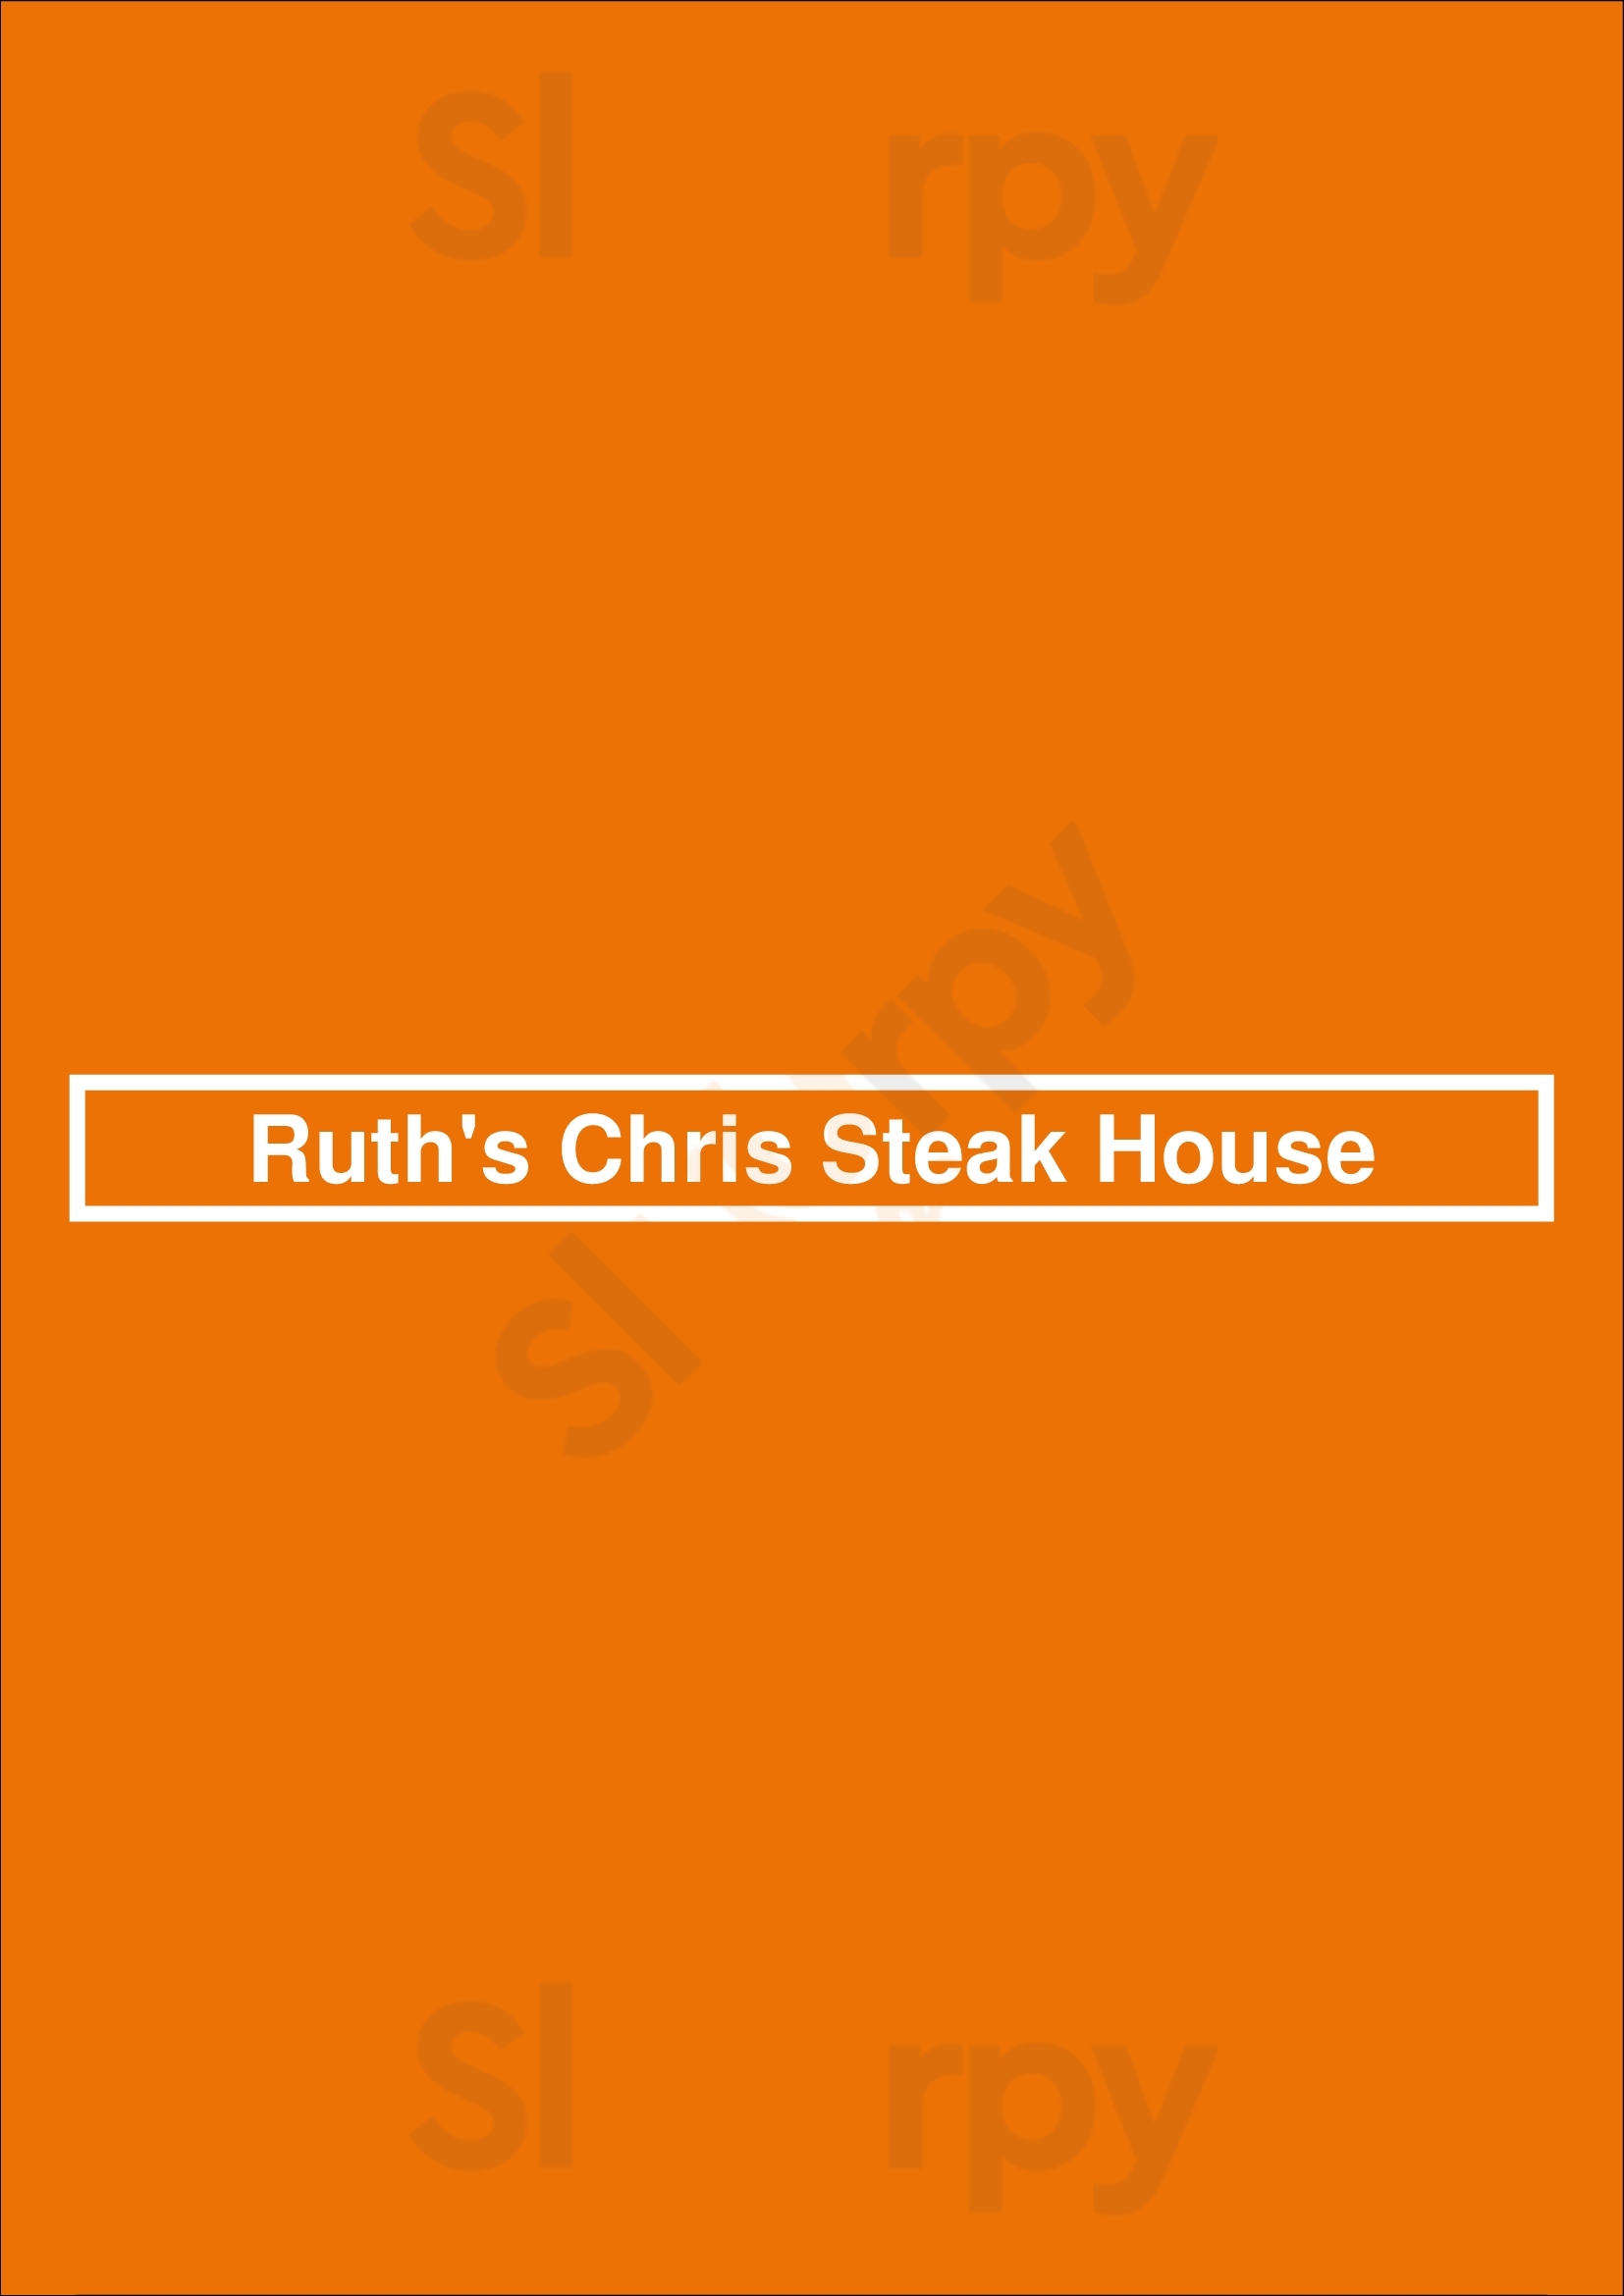 Ruth's Chris Steak House Cincinnati Menu - 1